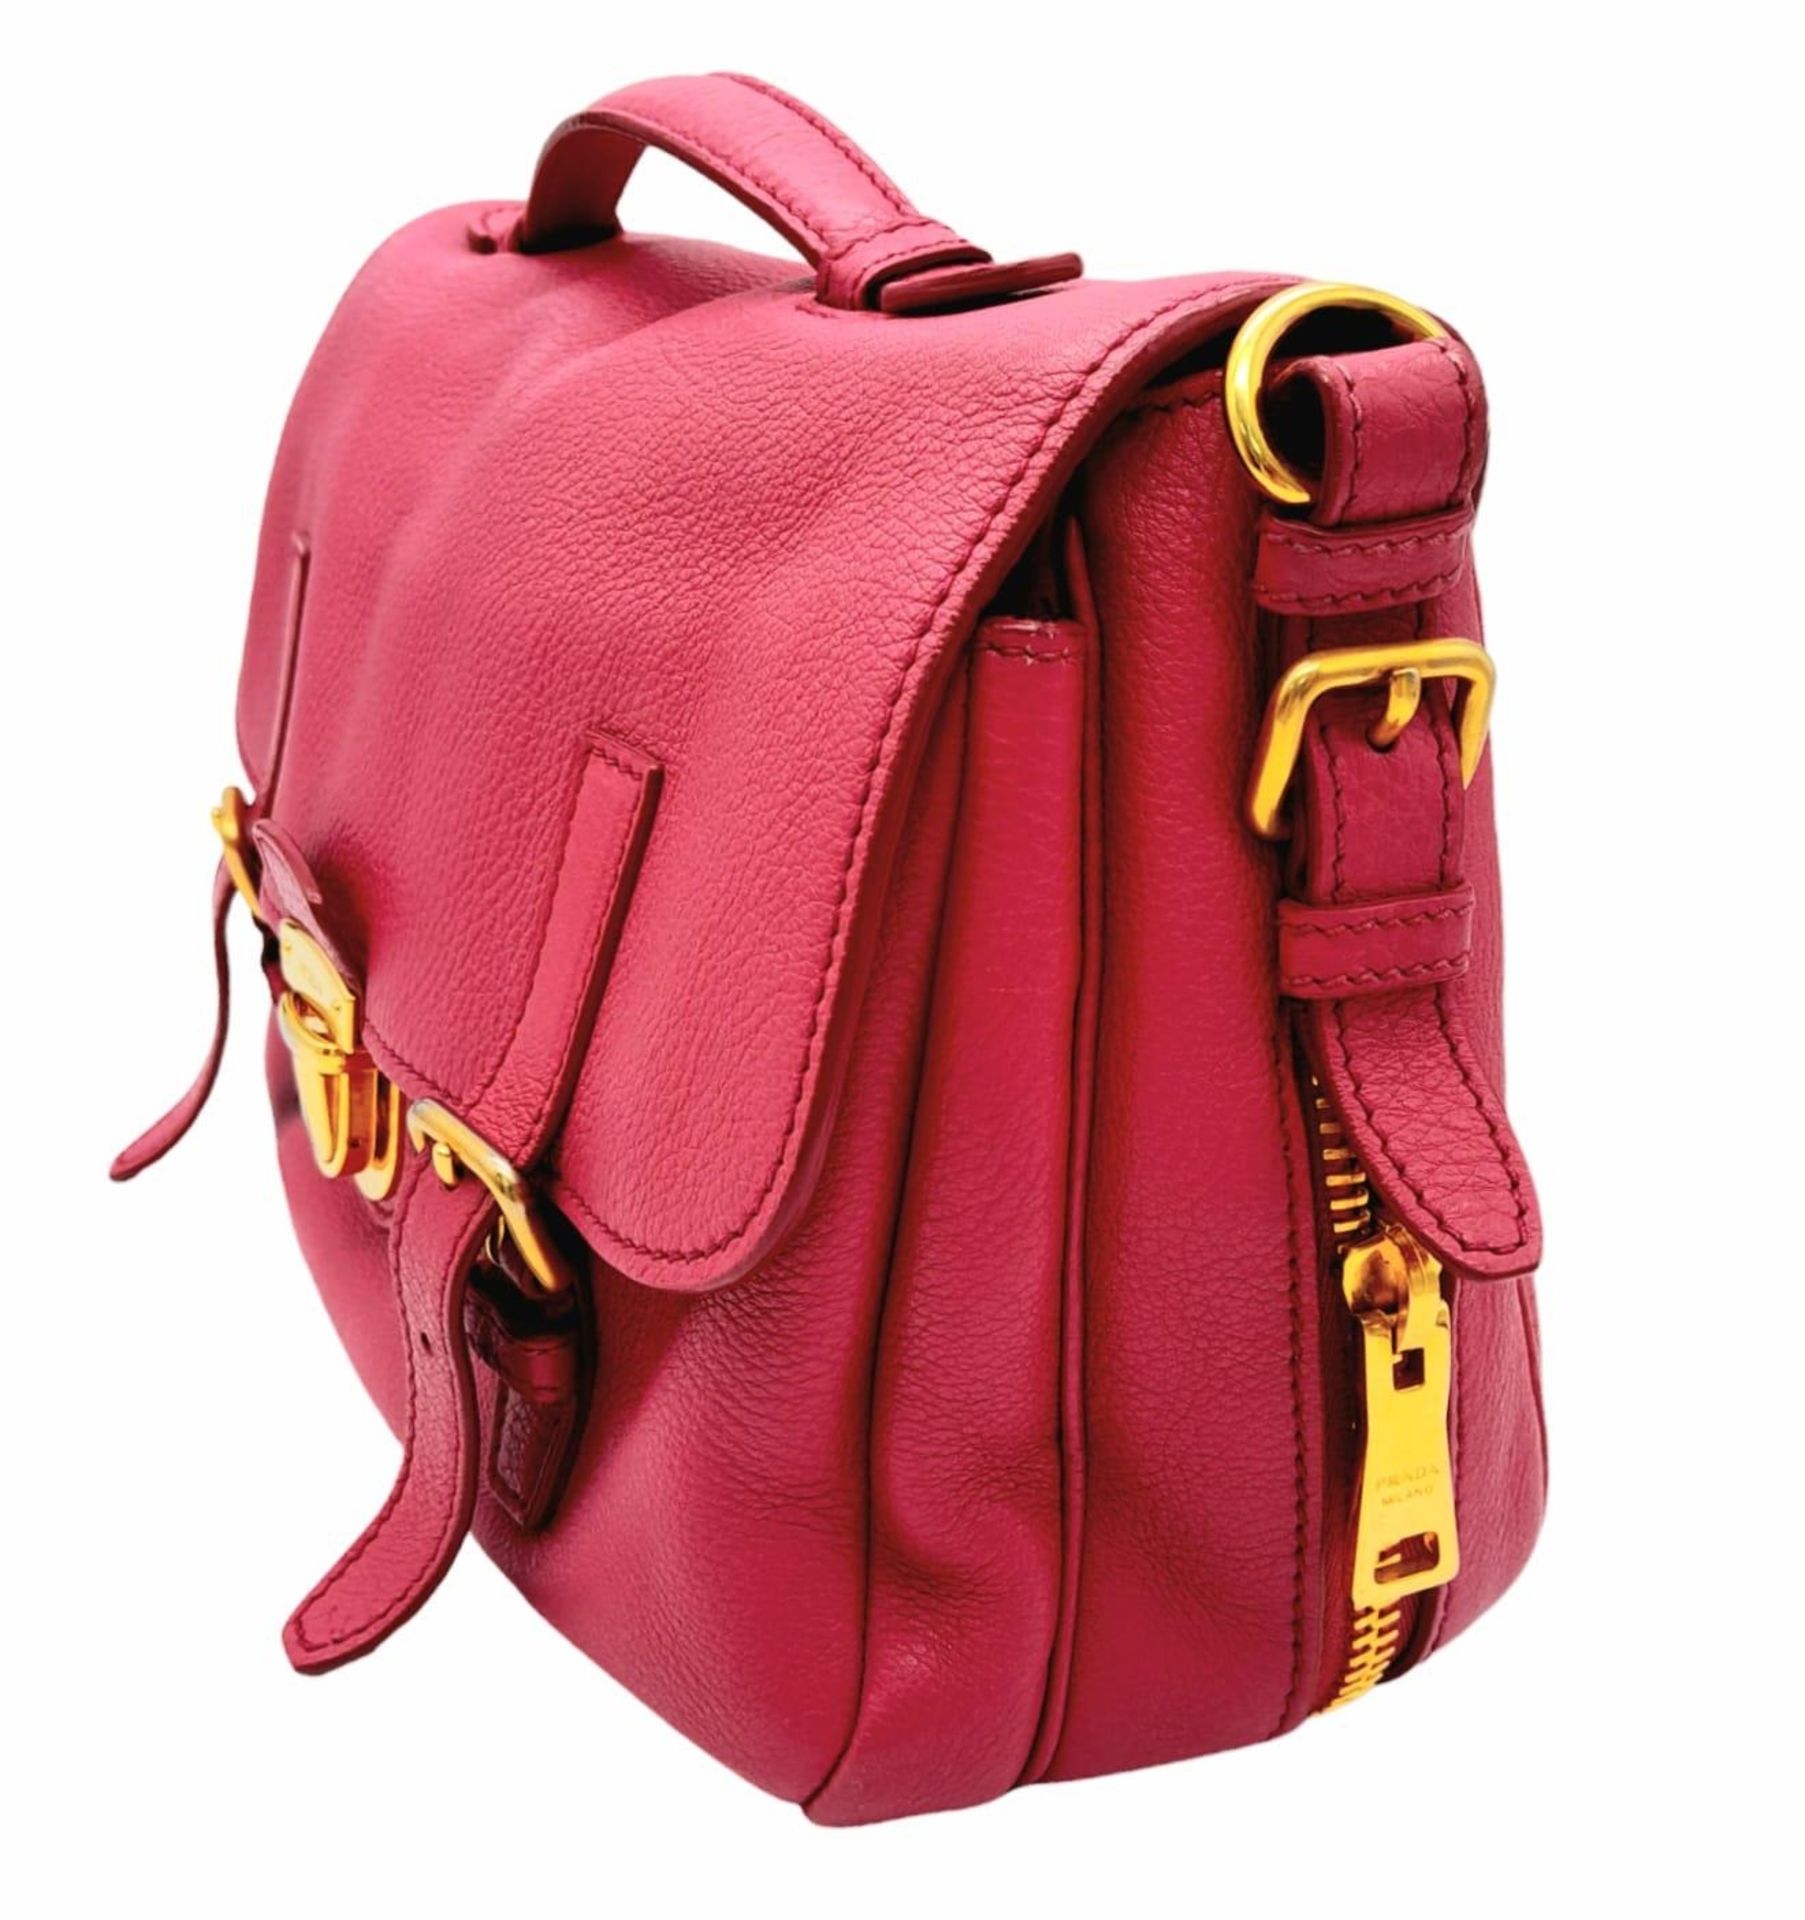 A Prada Vitello Daino satchel bag, soft pink leather, matching leather/fabric interior, gold tone - Image 2 of 11